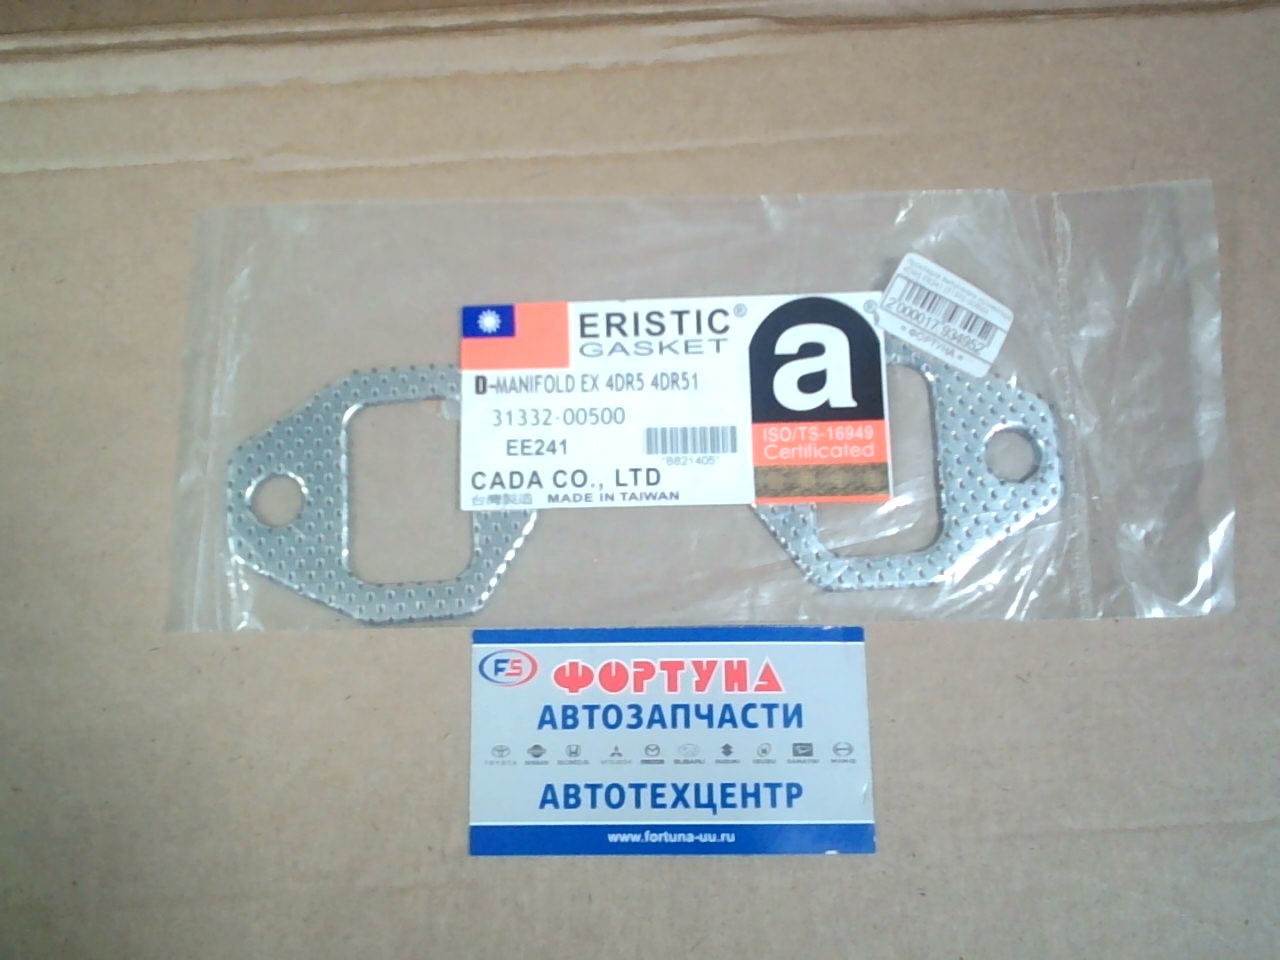 Прокладка выпускного коллектора 4DR5 EE241 [31332-00500] ERISTIK /цена за 1шт./ на  